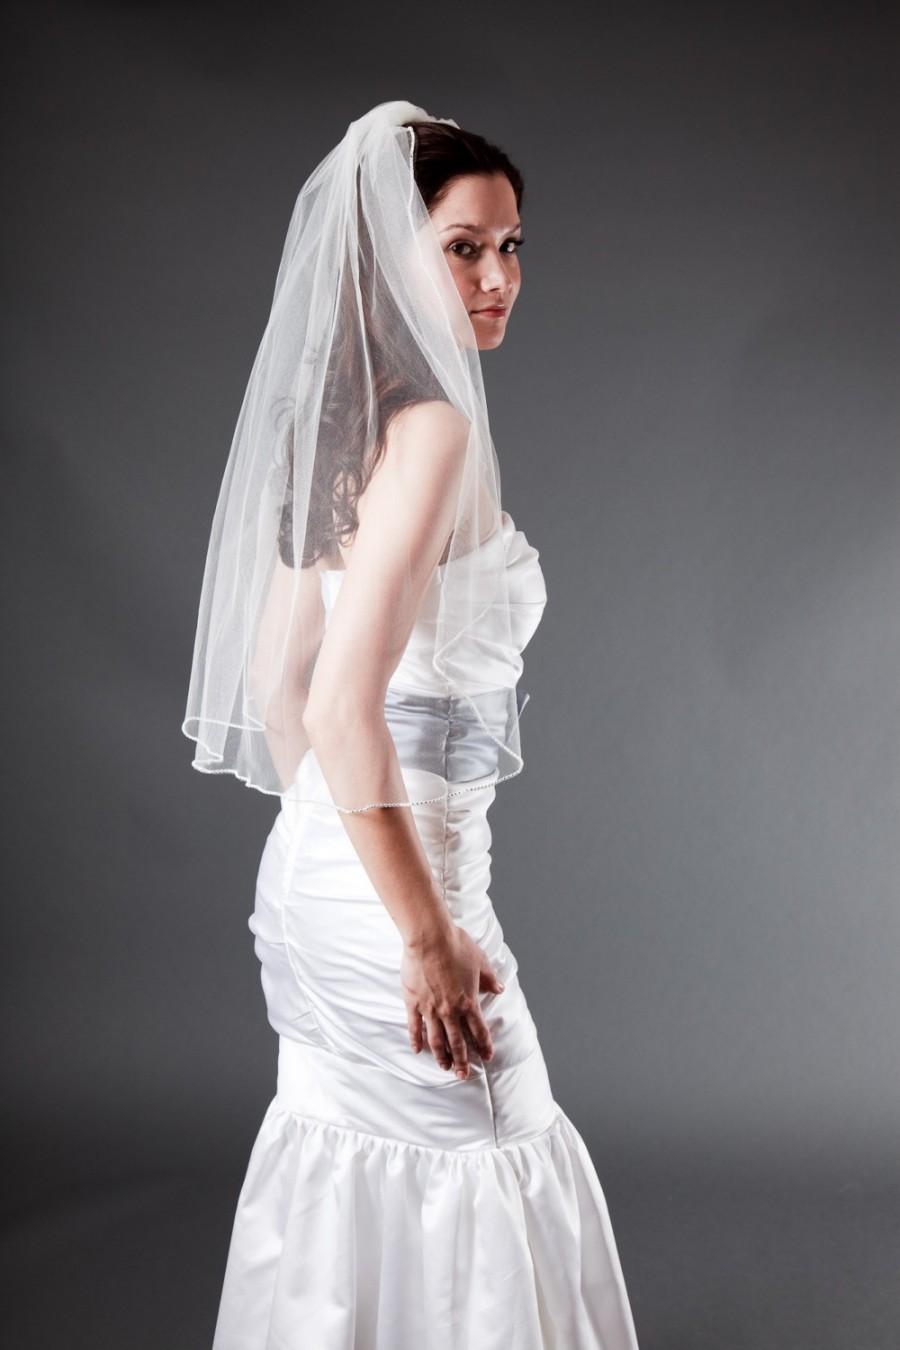 Wedding - Wedding Veil - Handmade, Elbow Length with Swarowski Crystals Rbbon - White, Diamond White, Ivory, Champagne, Blush